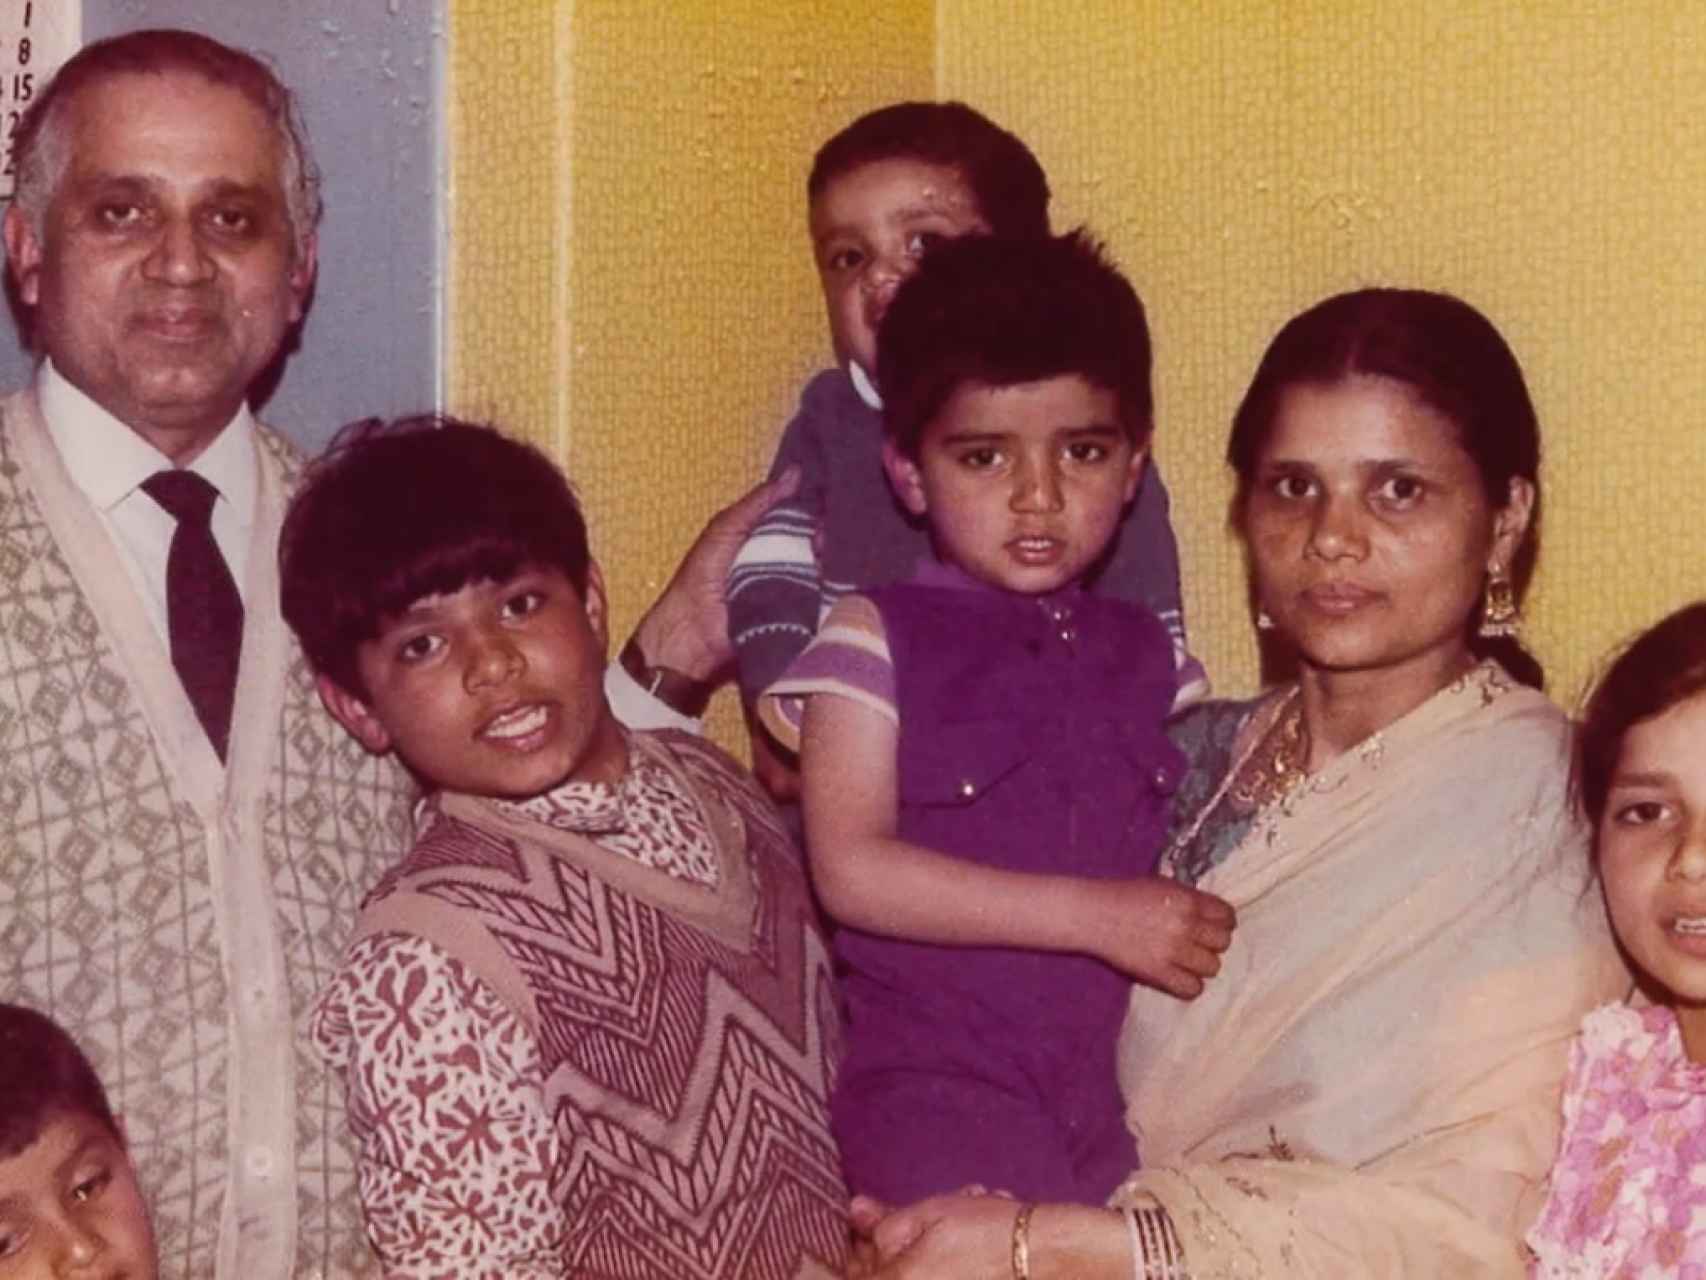 Sadiq Khan cuando era niño (con trajecito morado) junto a sus padres.